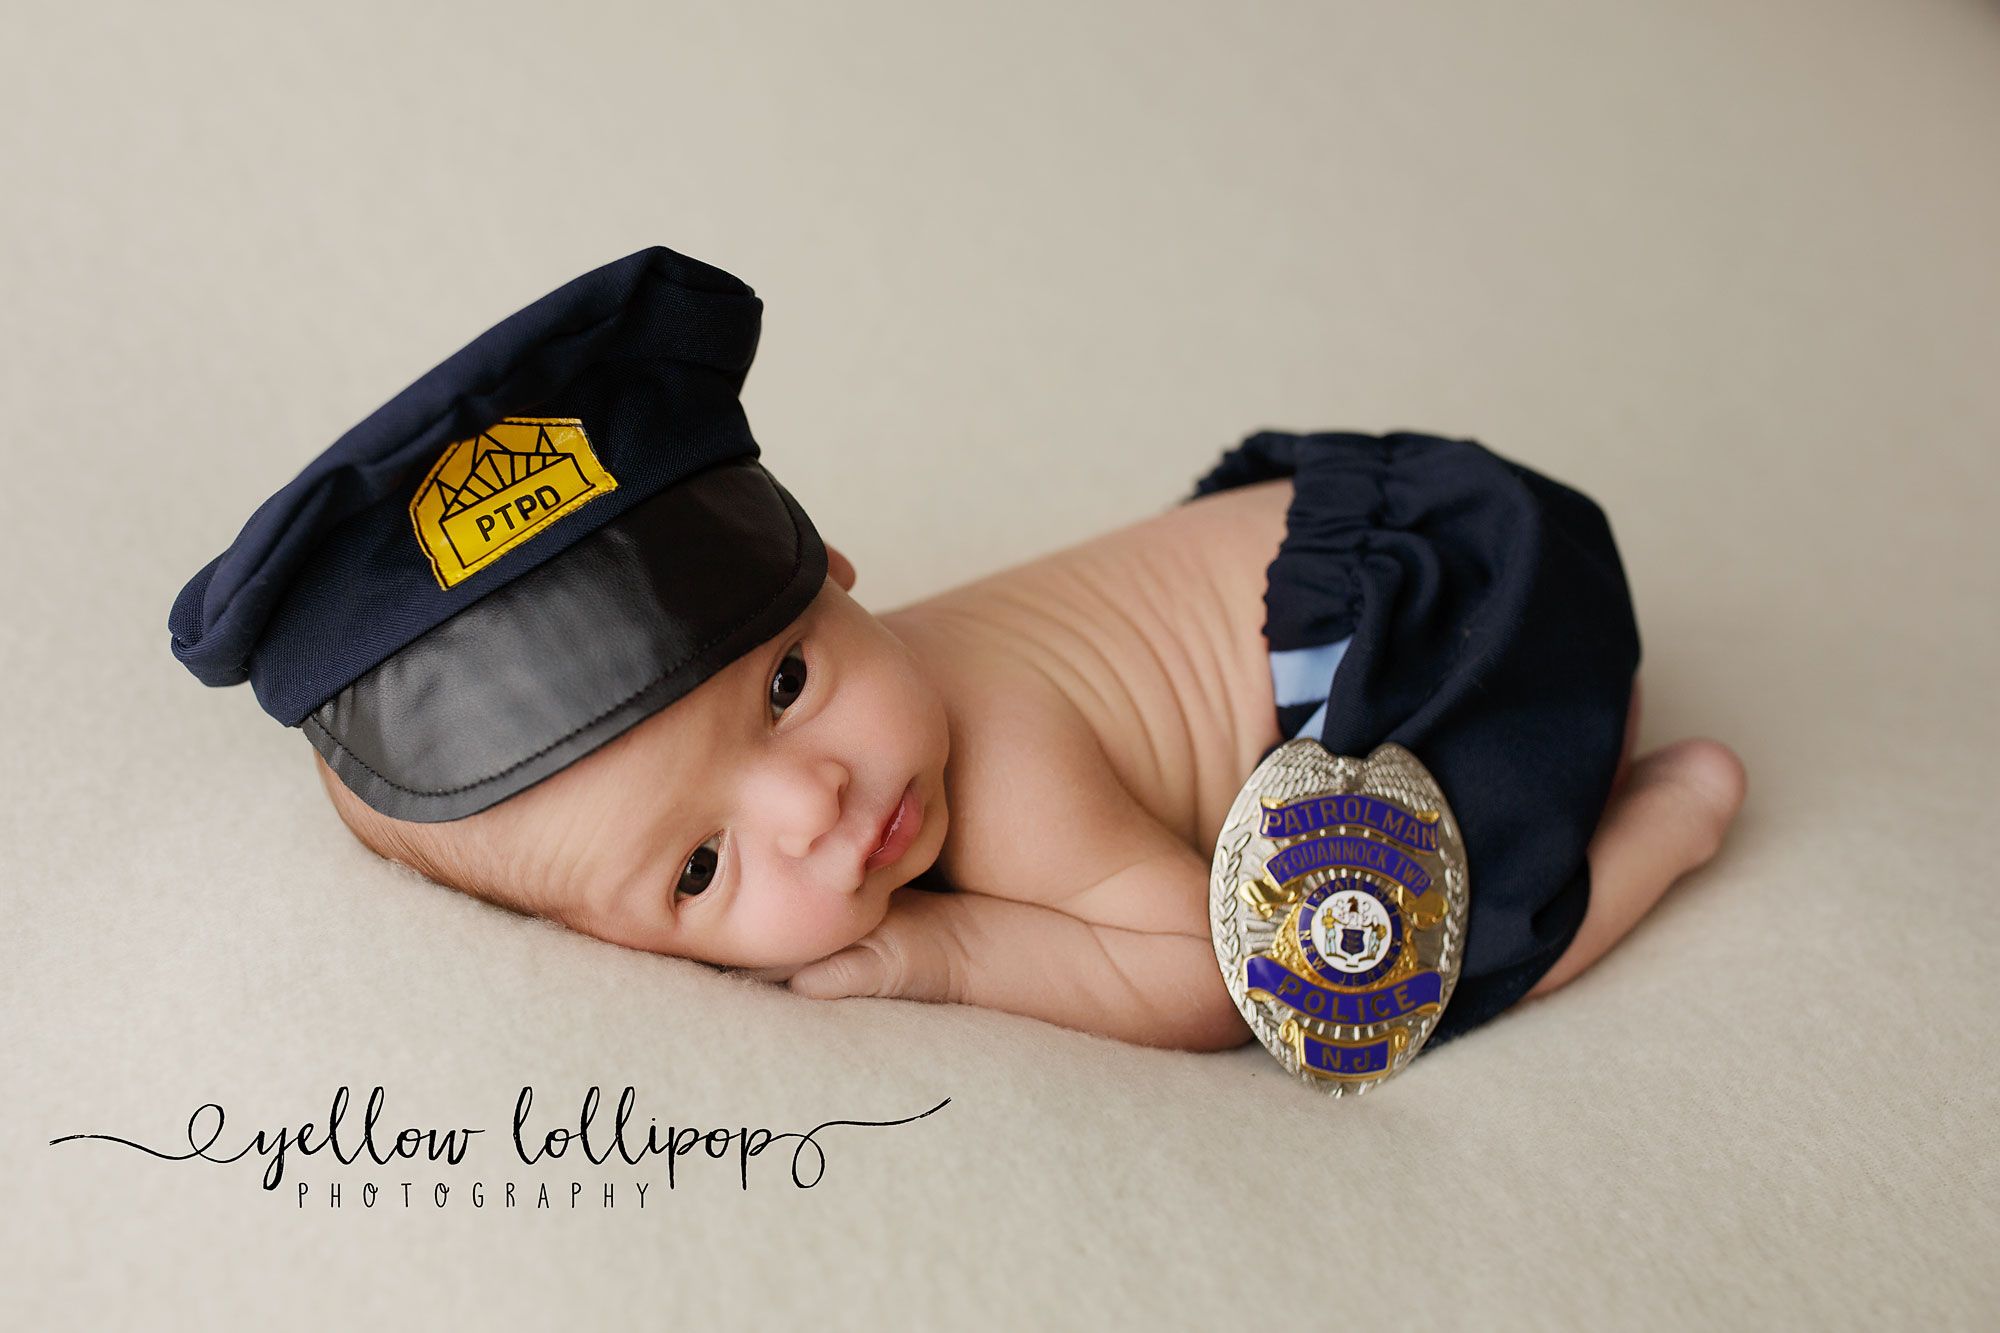 newborn police photography ideas Newborn Police Picture Ideas